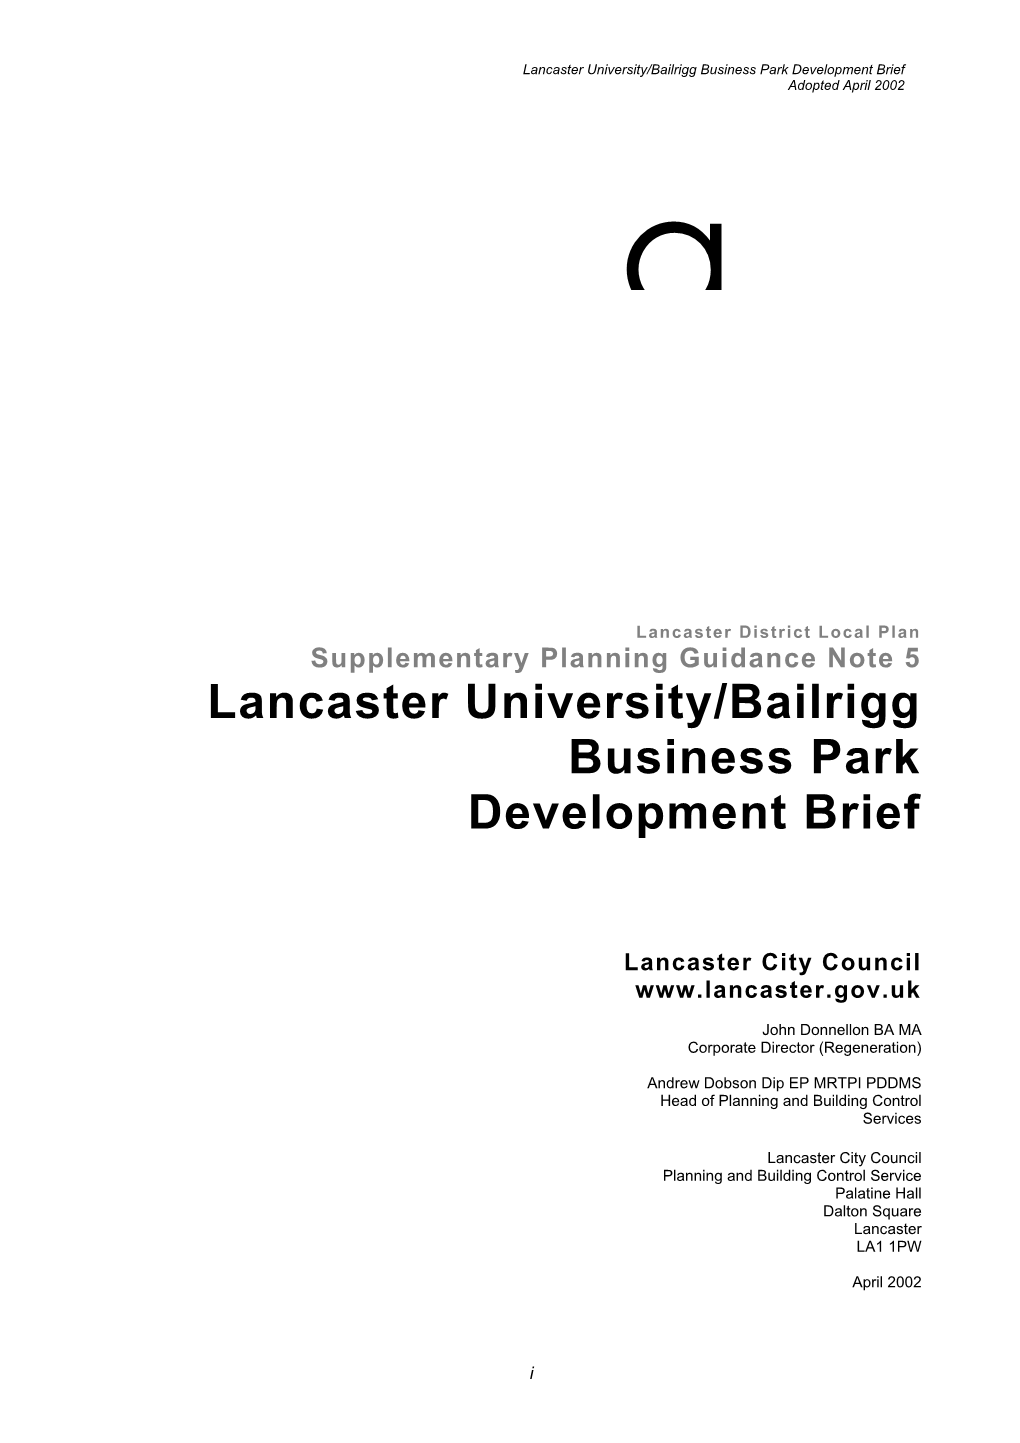 Lancaster University/Bailrigg Business Park Development Brief Adopted April 2002 A